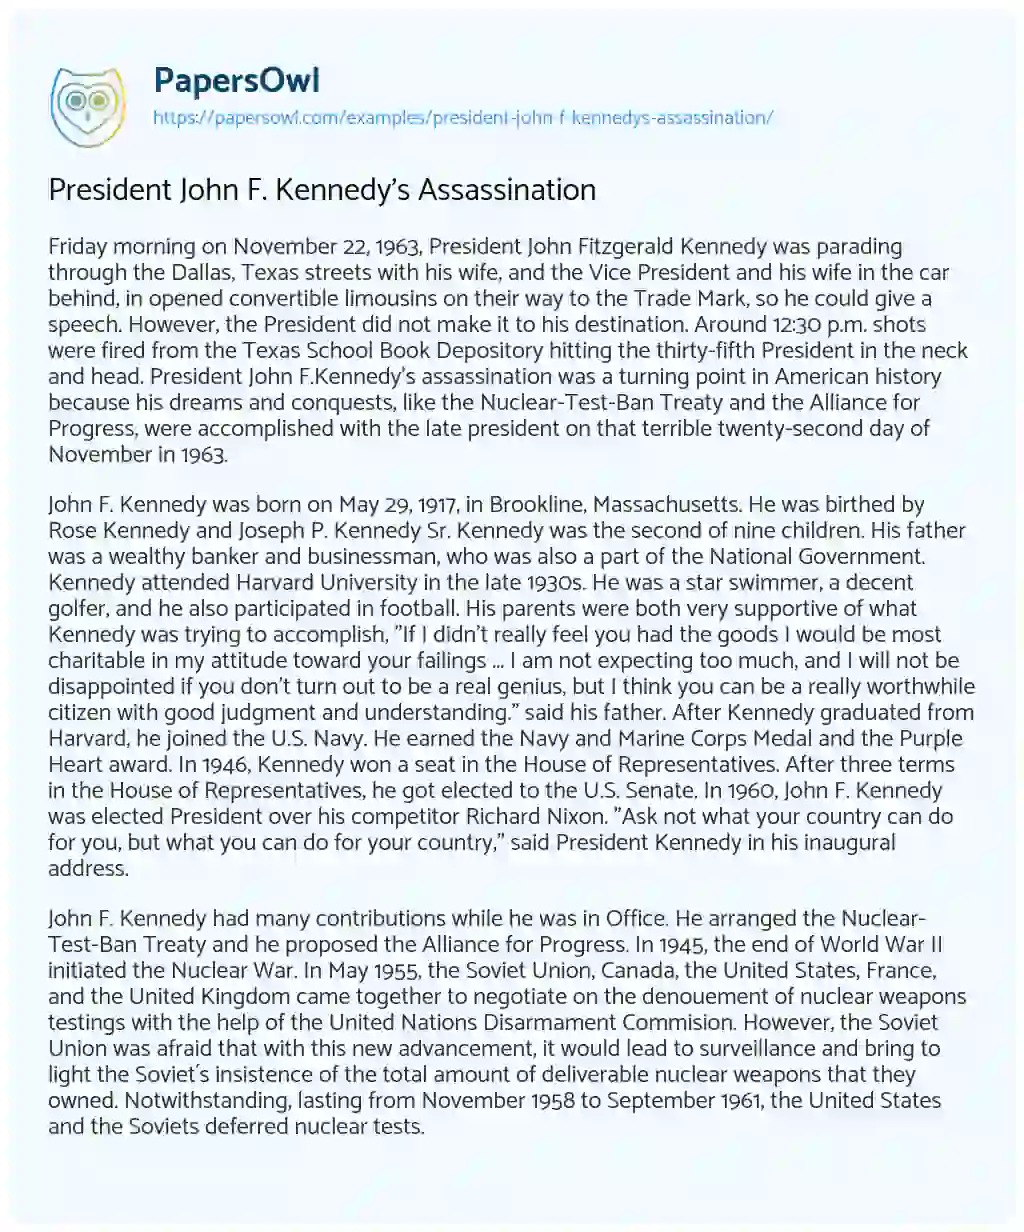 Essay on President John F. Kennedy’s Assassination